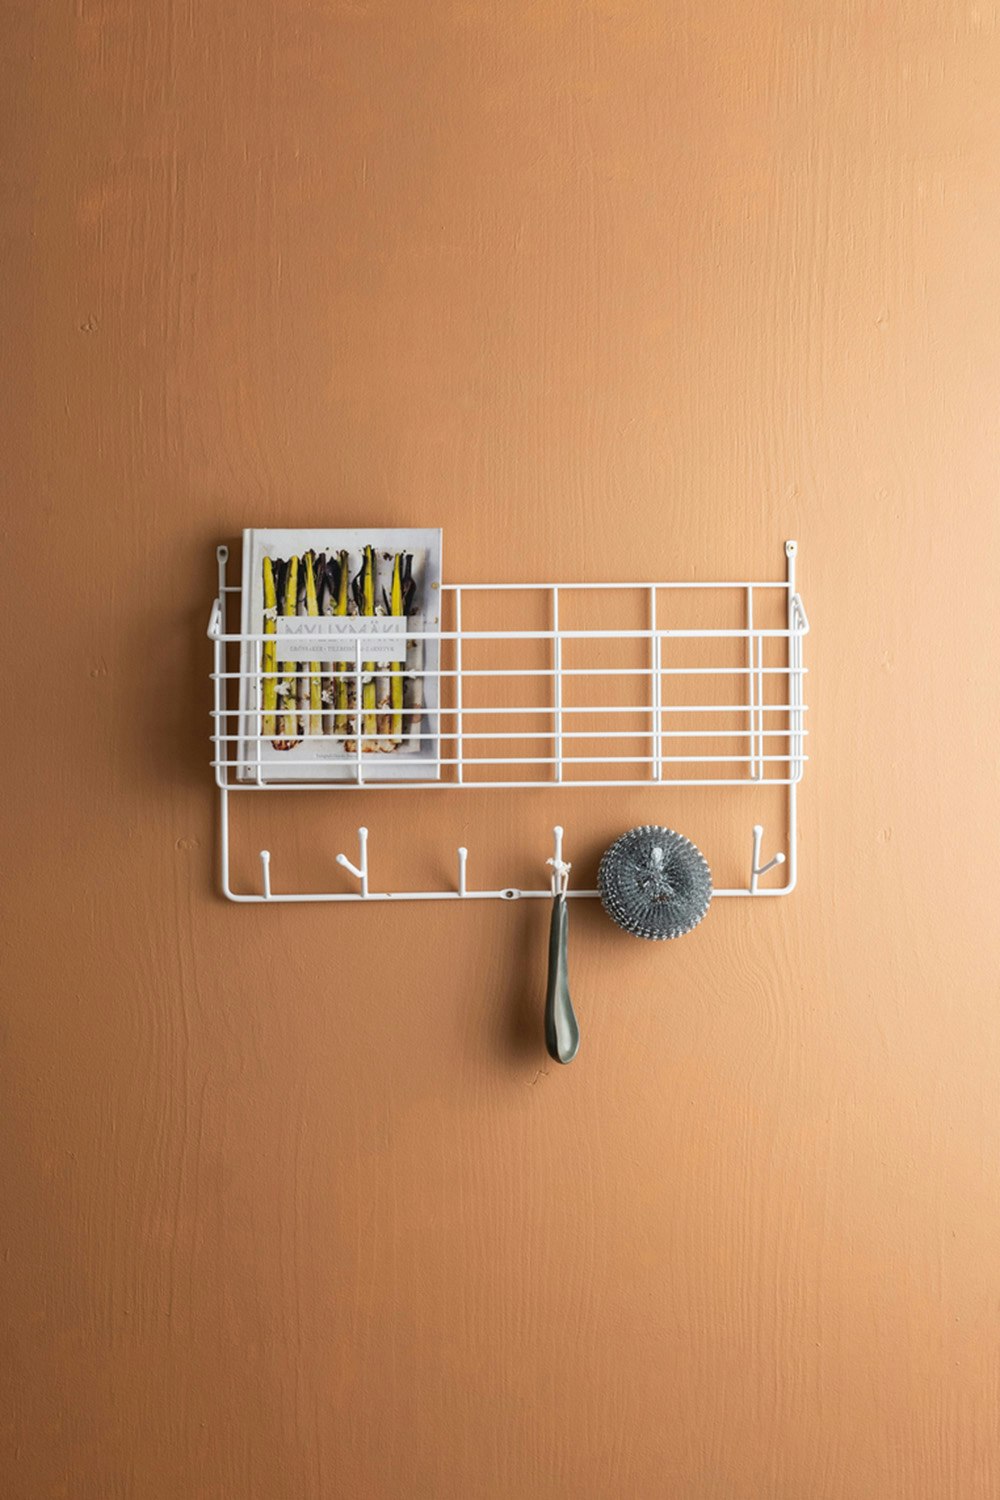 https://royaldesign.com/image/2/maze-mitten-shelf-storage-hooks-11?w=800&quality=80